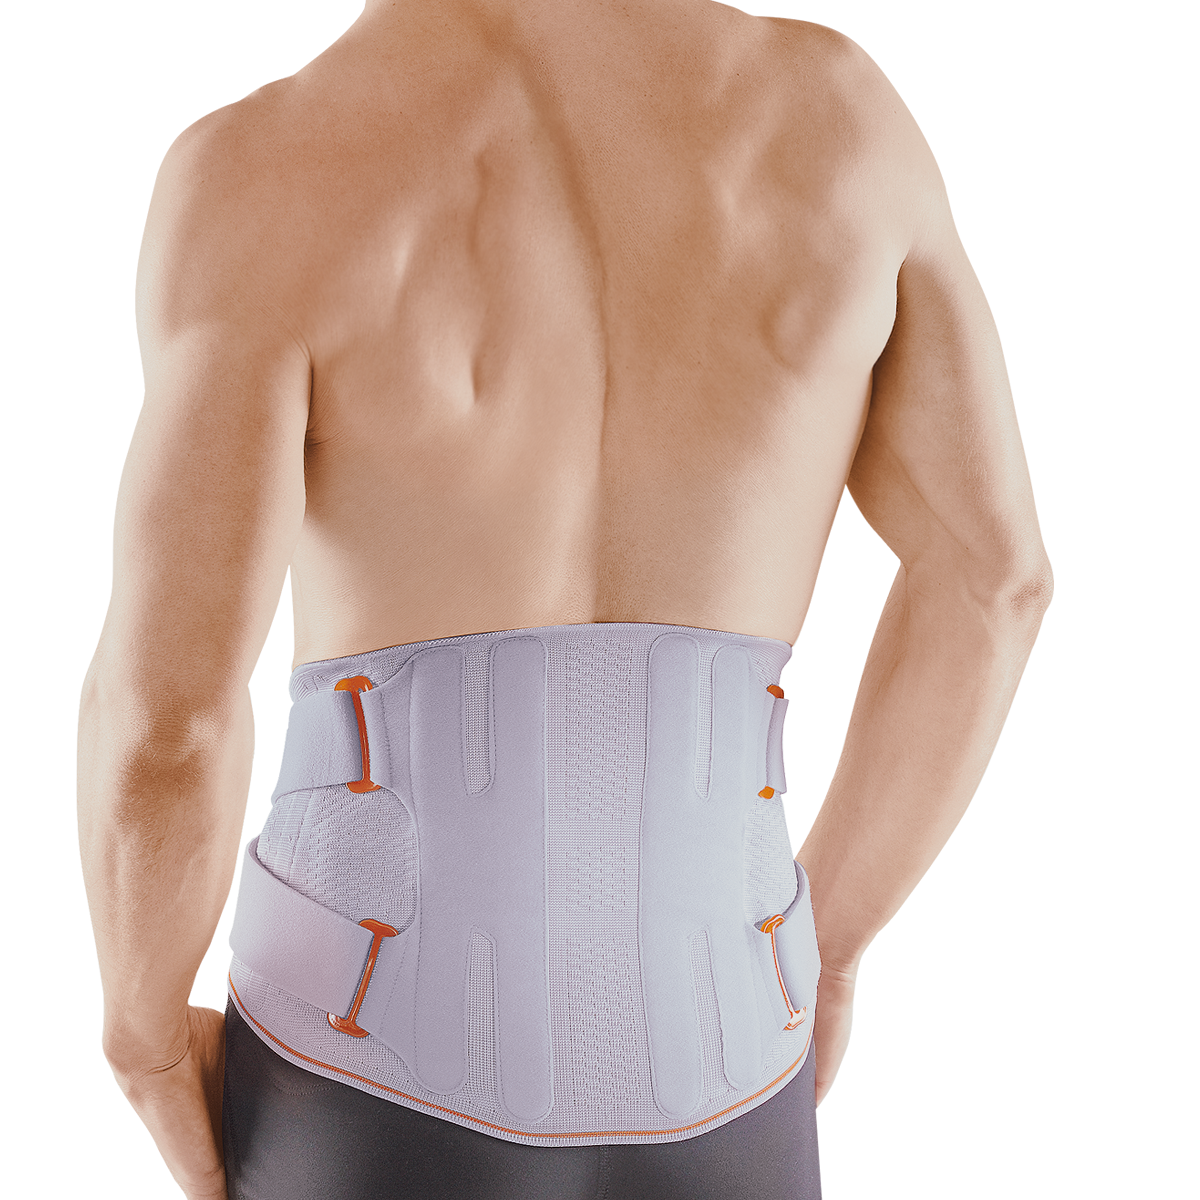 Lumbar Support Belt for back pain